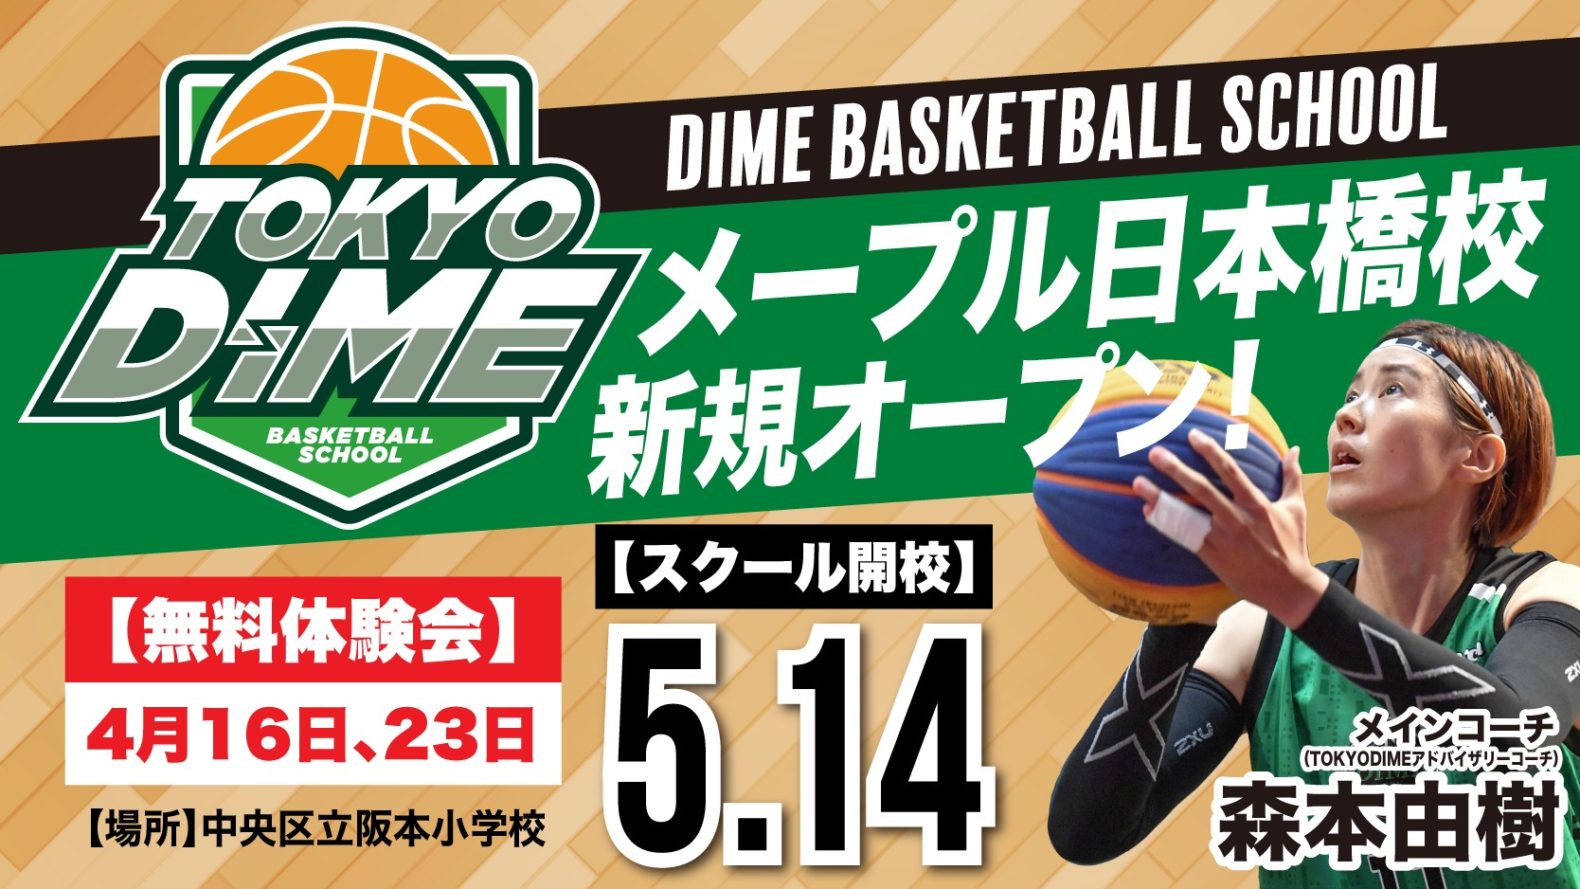 DIME Basketball School メープル日本橋校開校のお知らせ | TOKYO DIME